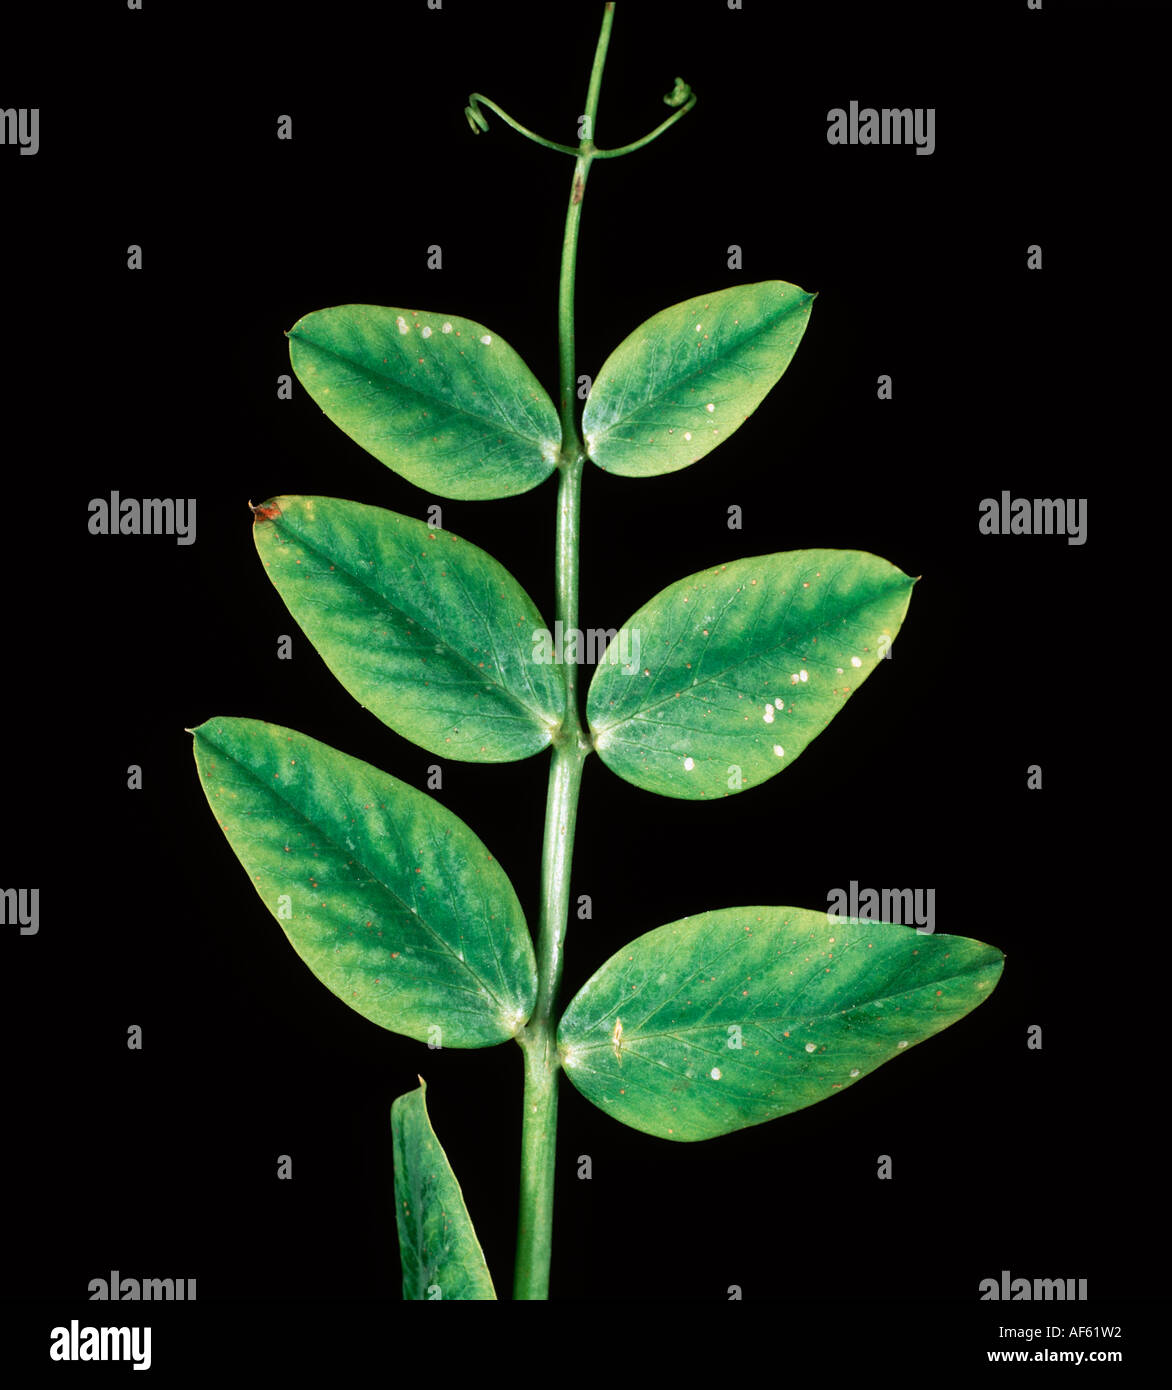 Manganese deficiency Mg deficiency symptom on a pea leaf Stock Photo